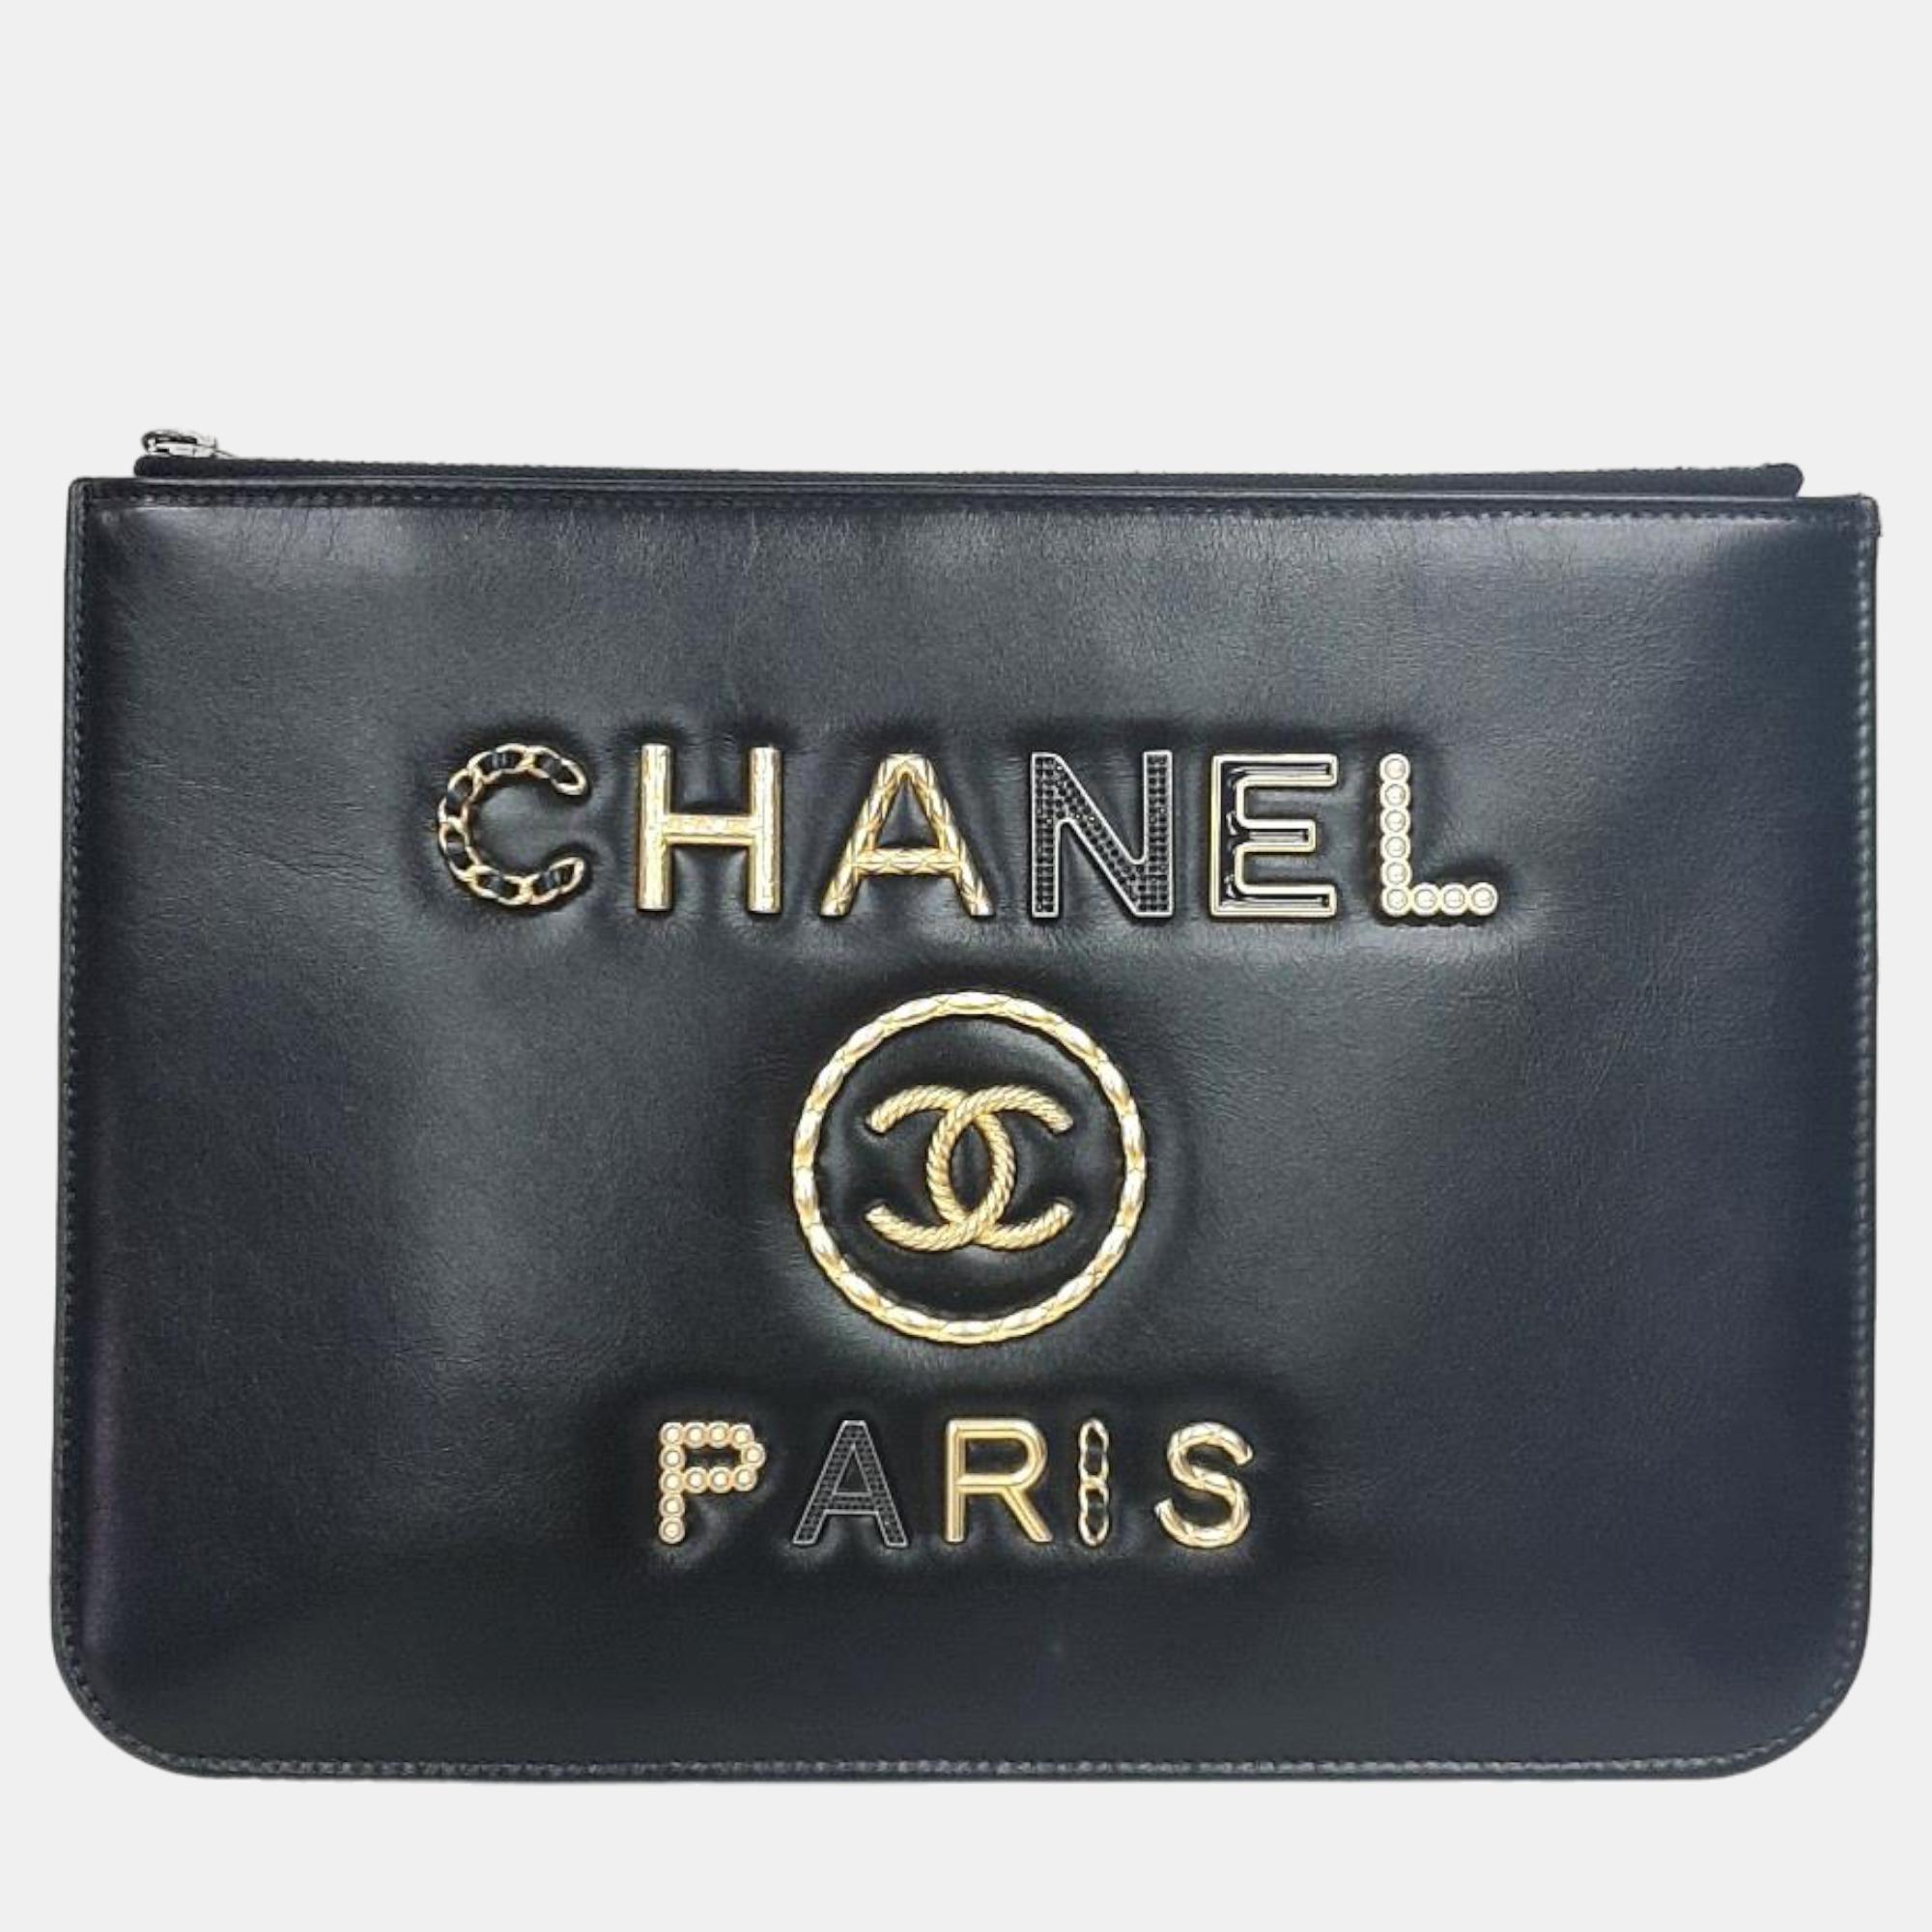 Chanel black leather 19 clutch bag